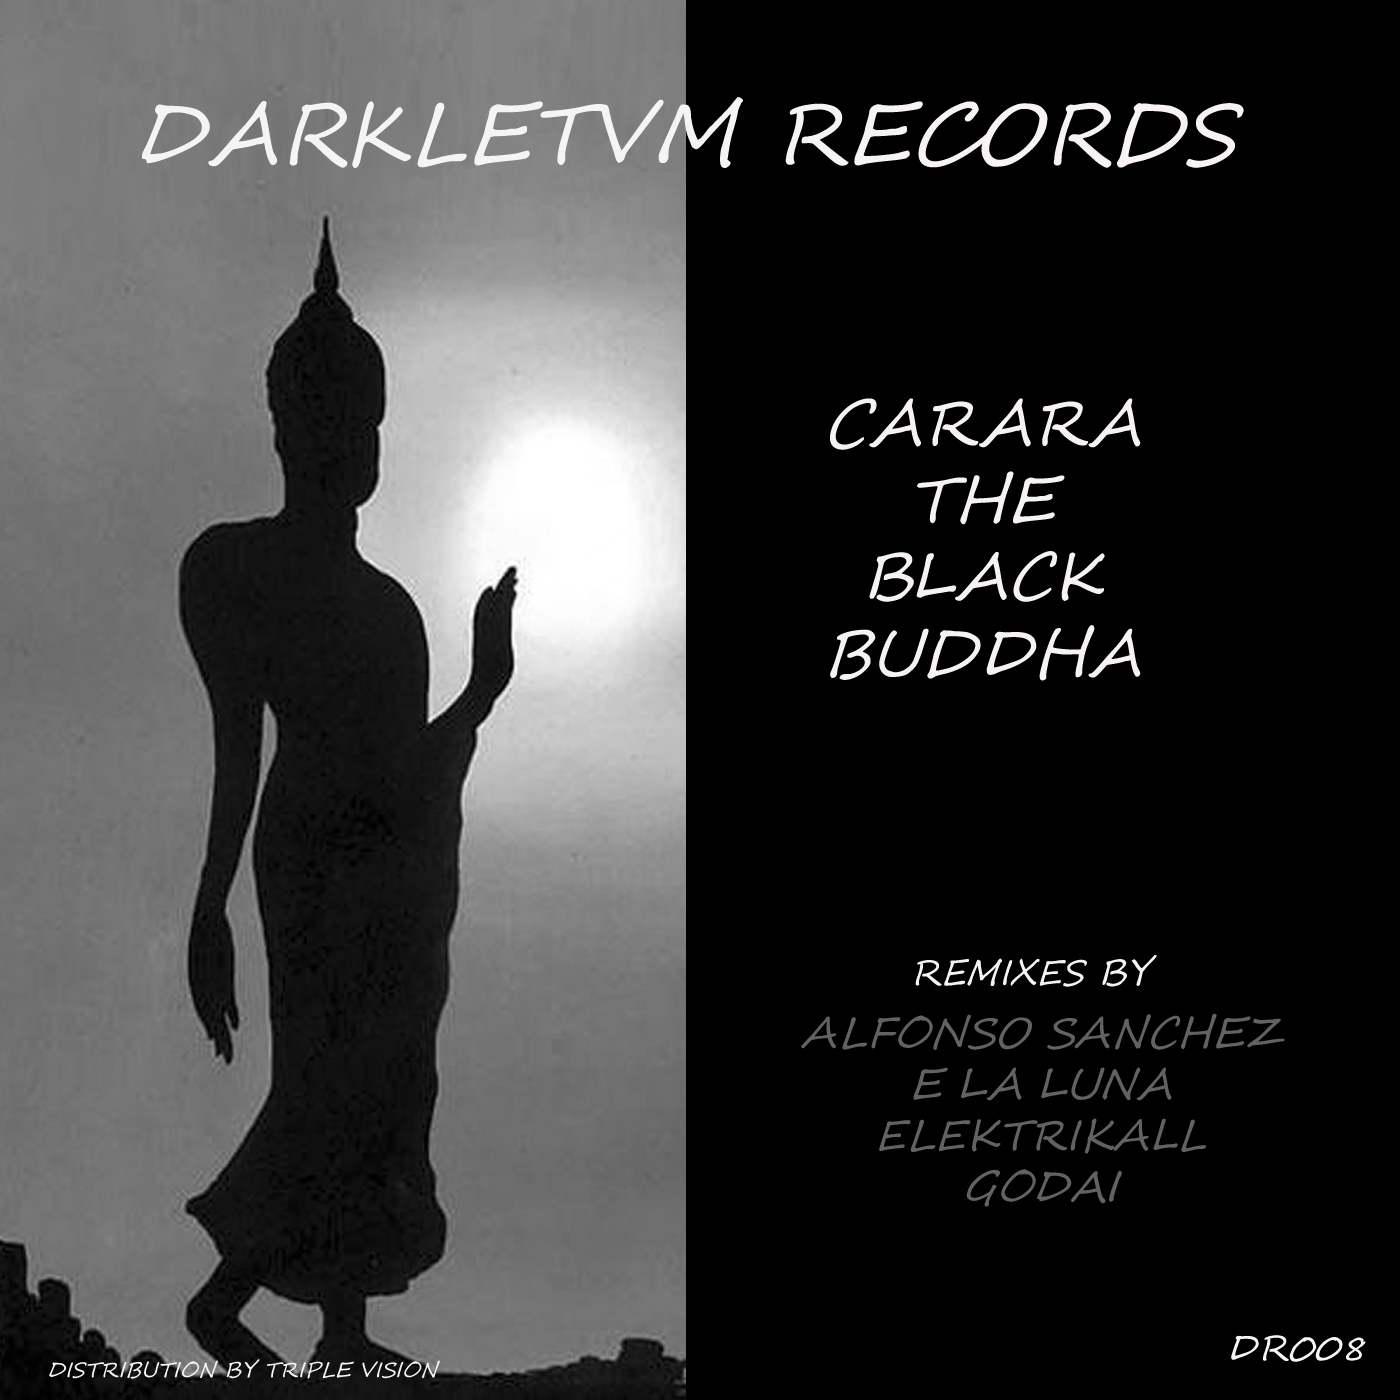 The Black Buddha (E La Luna Remix)